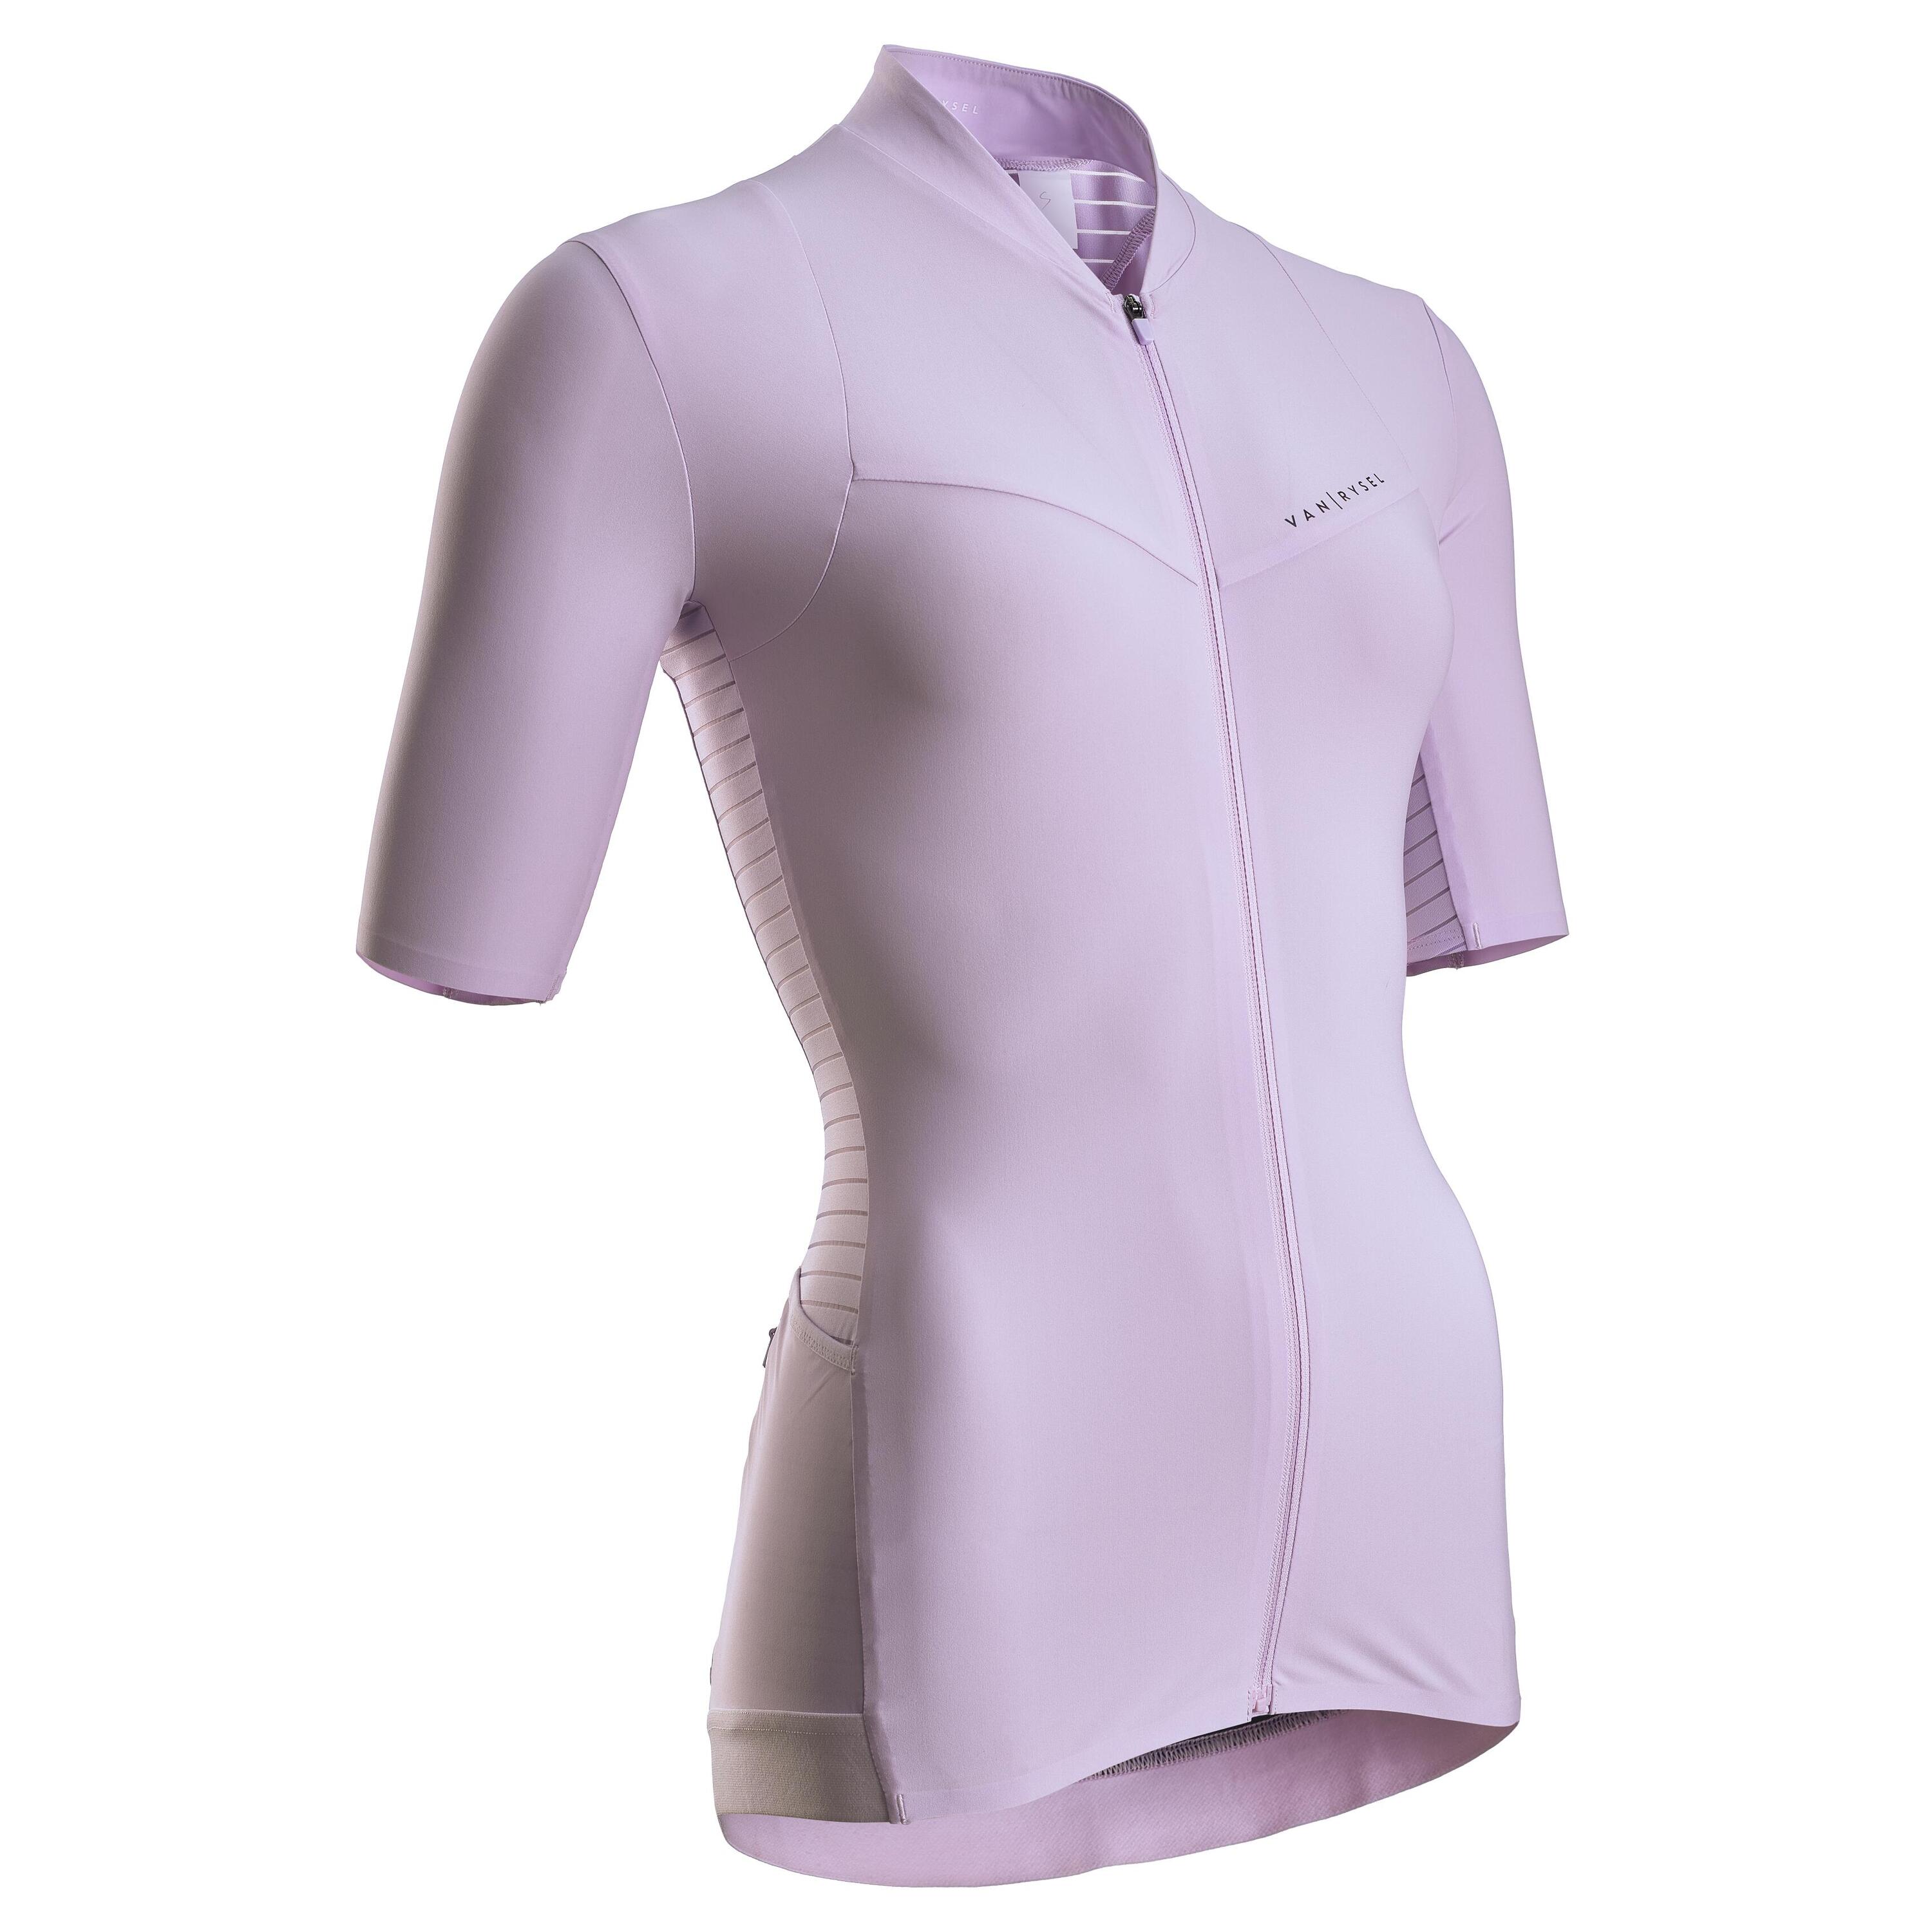 VAN RYSEL Women's Road Cycling Short-Sleeved Jersey Endurance - Lilac